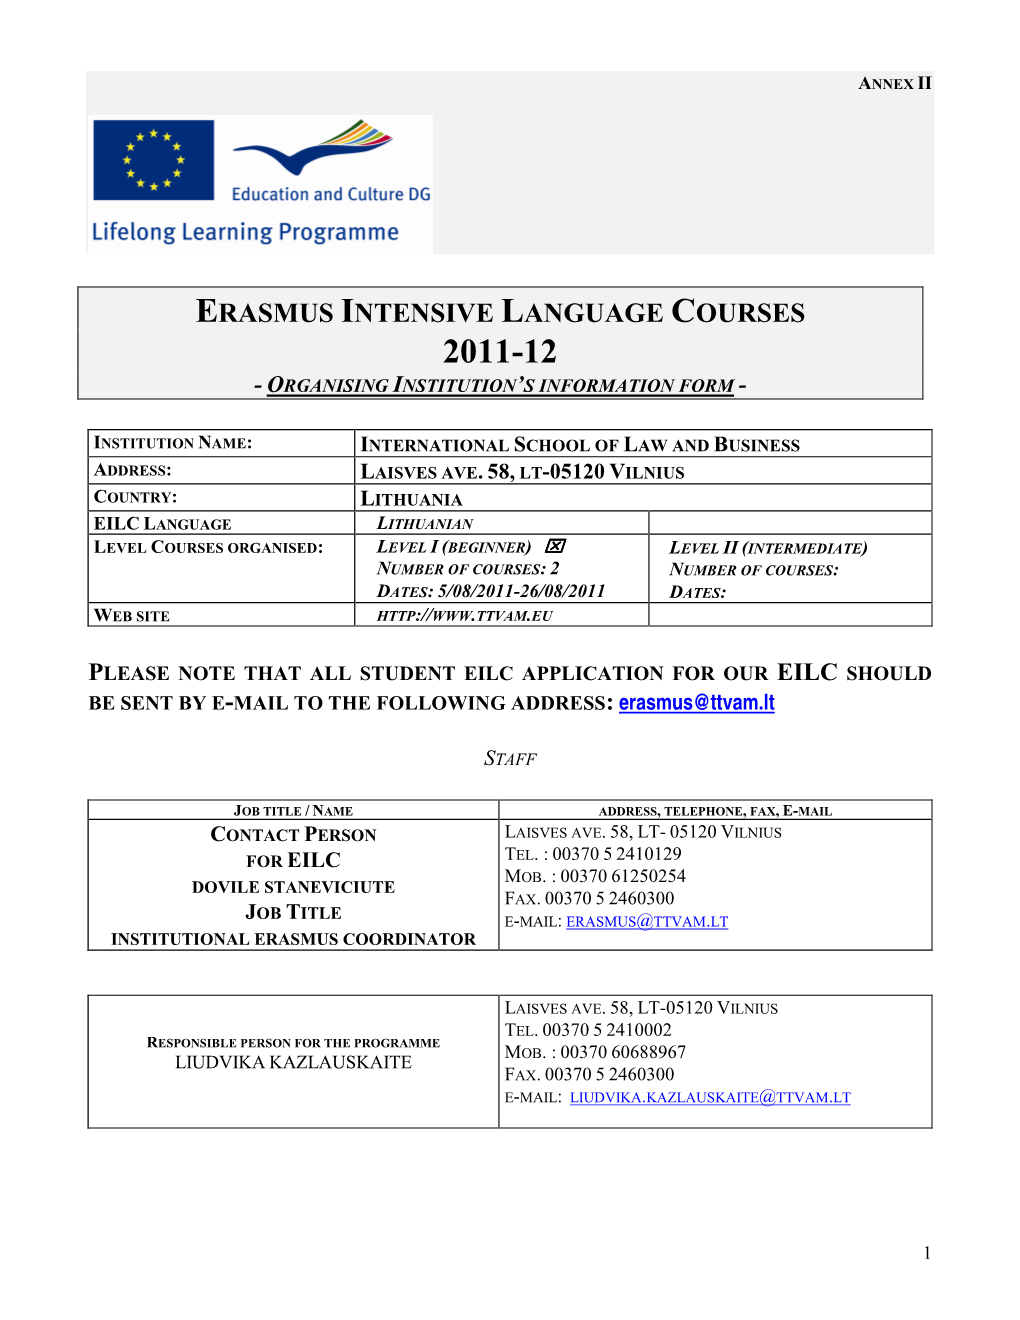 Erasmus Intensive Language Courses 2011-12 - Organising Institution ’S Information Form